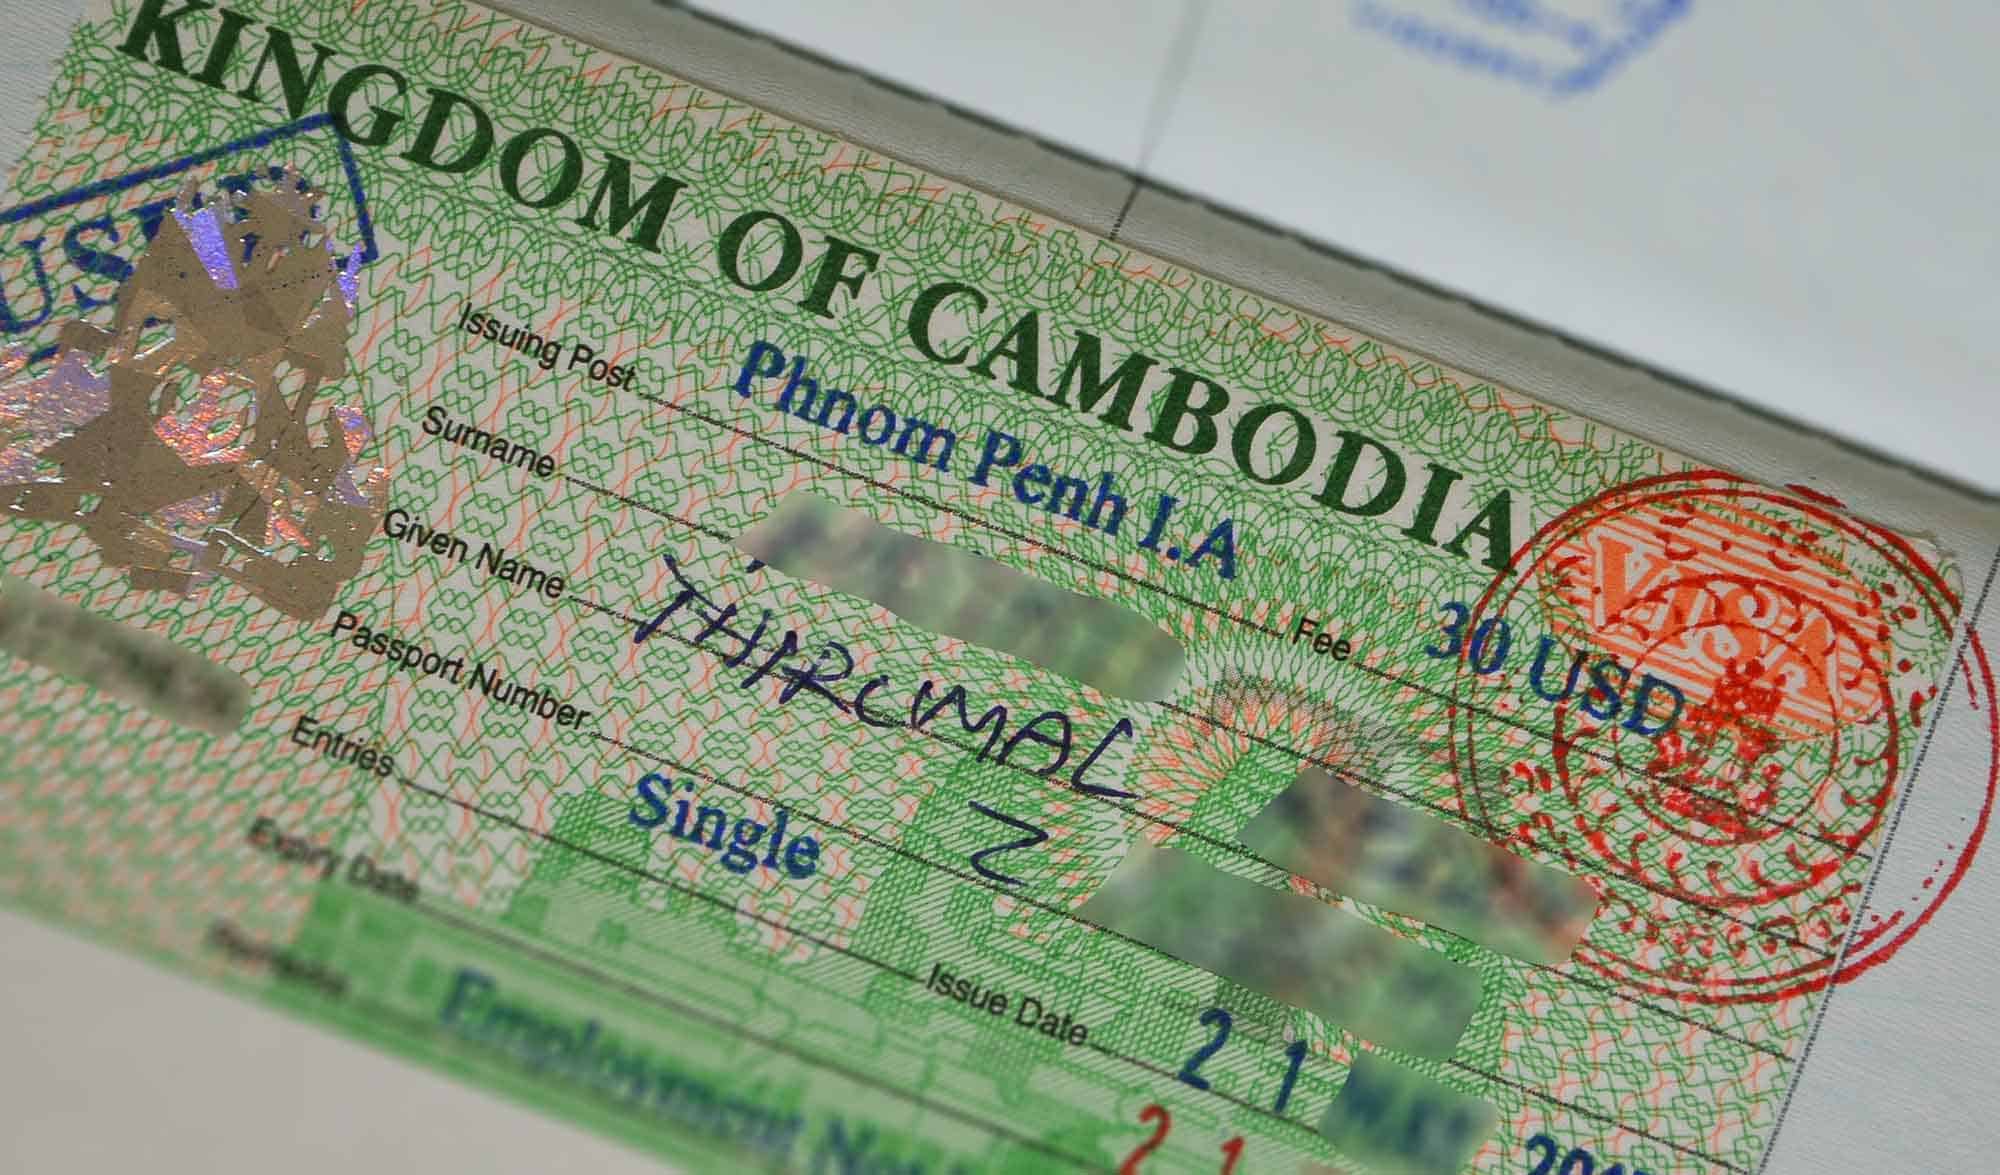 cambodia tourist visa photo size